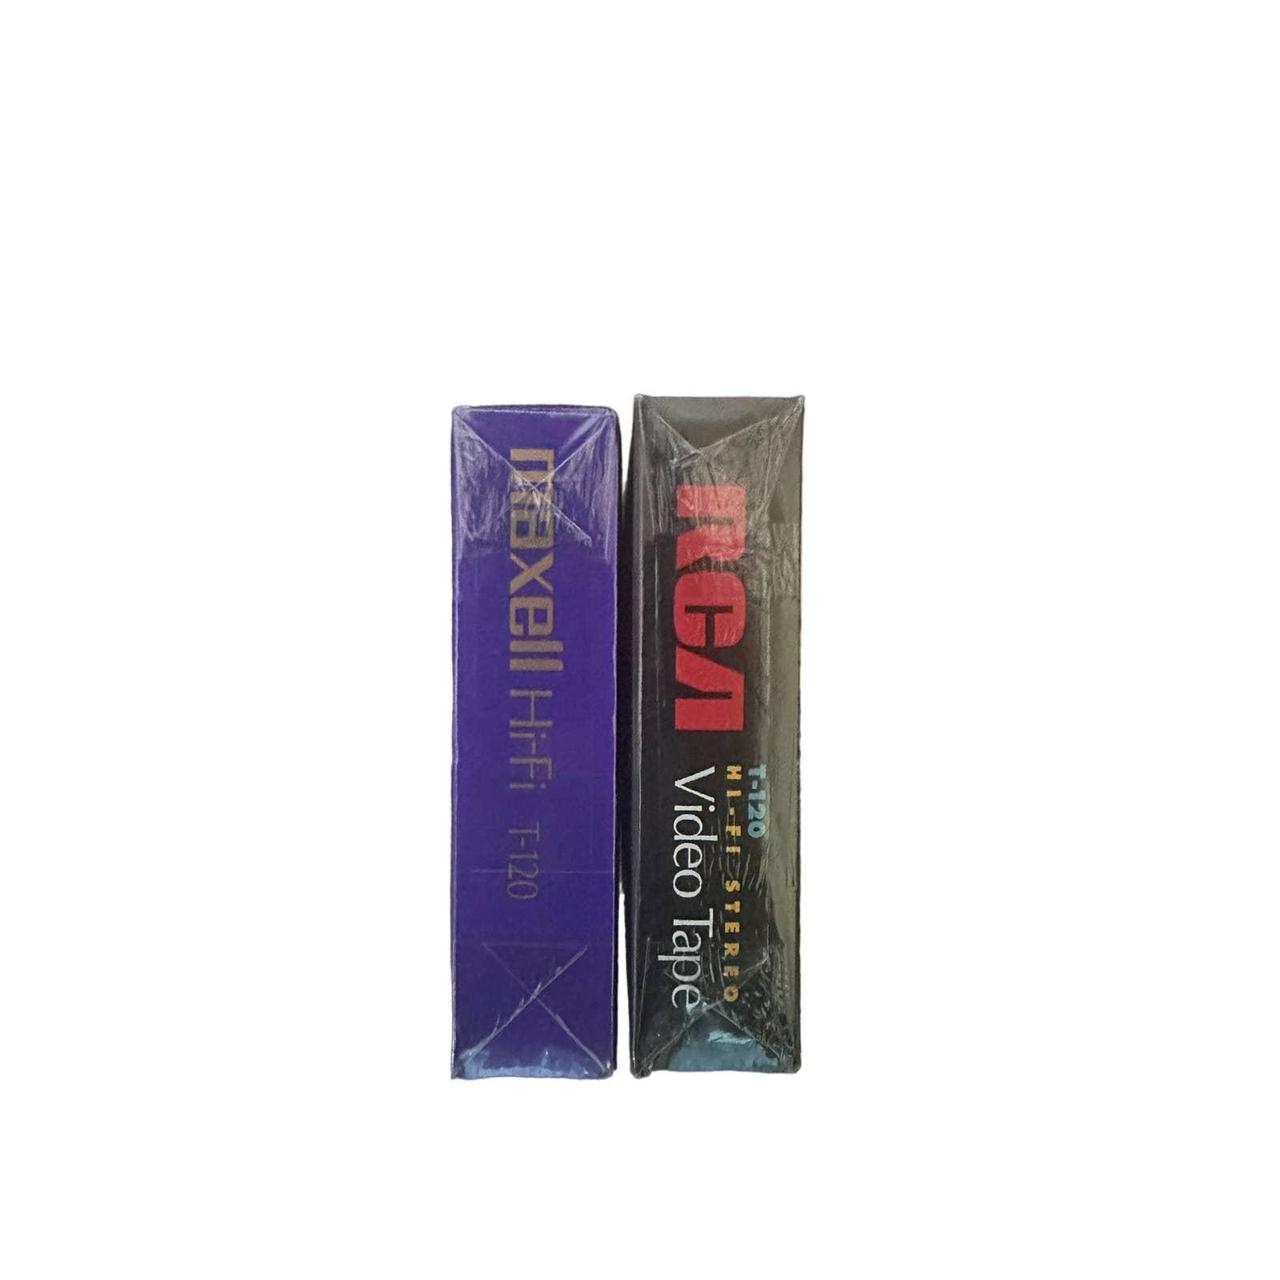 5 Vintage Maxell Cassette Tapes XLII XLII-S UR 90 90 - Depop